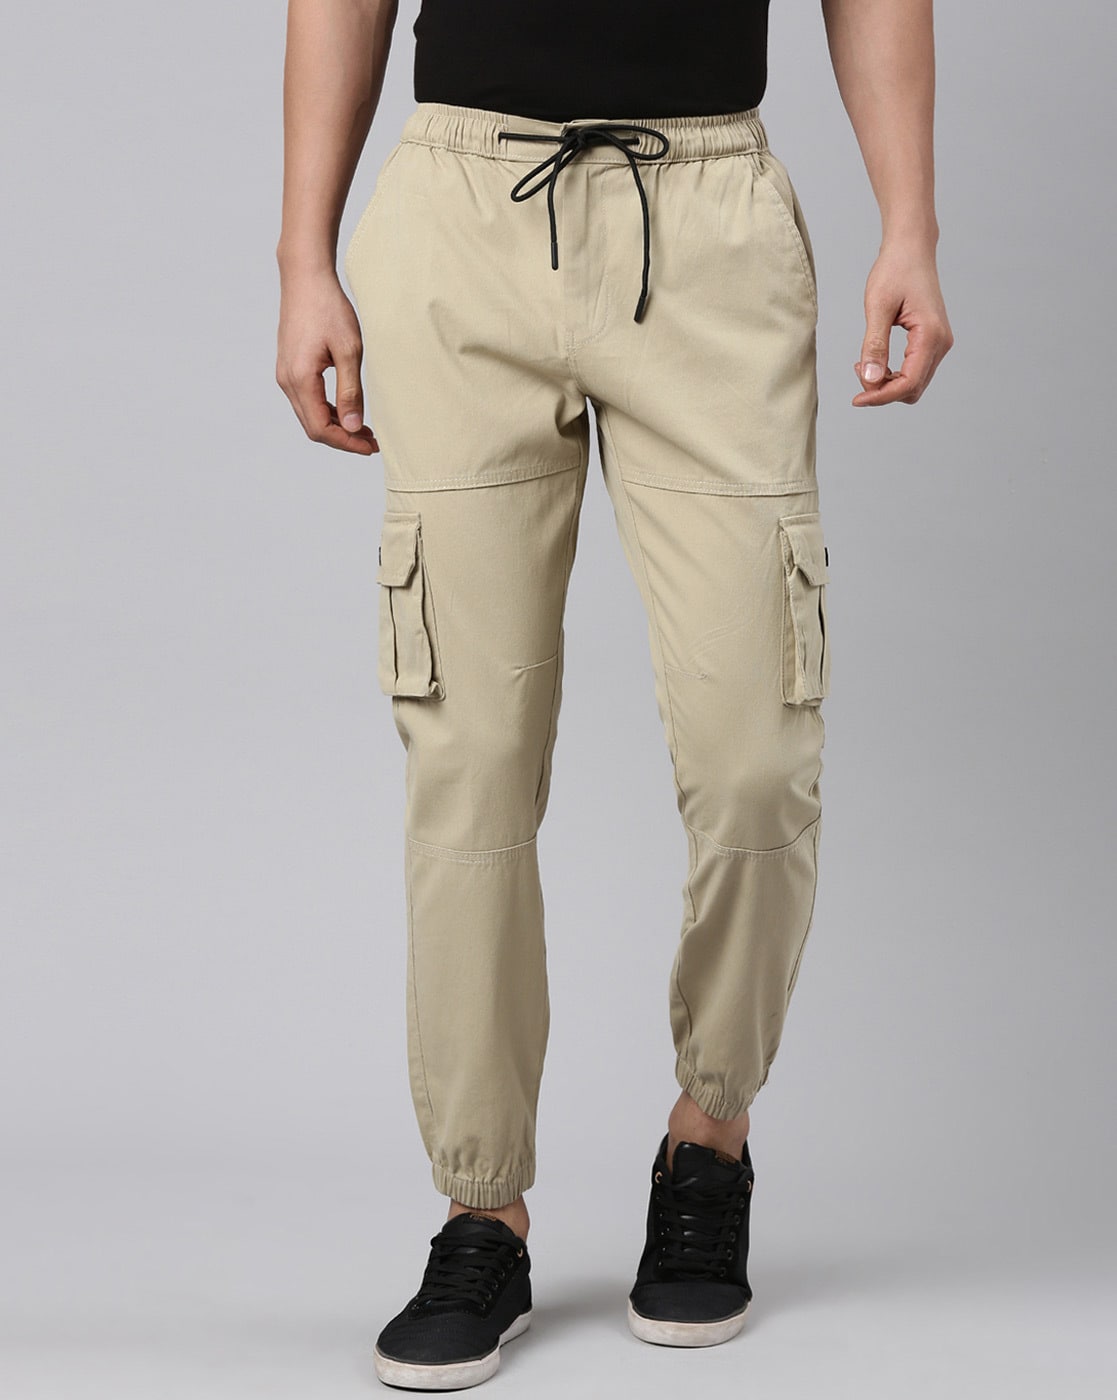 Buy Khaki Trousers & Pants for Men by ROOKIES Online | Ajio.com